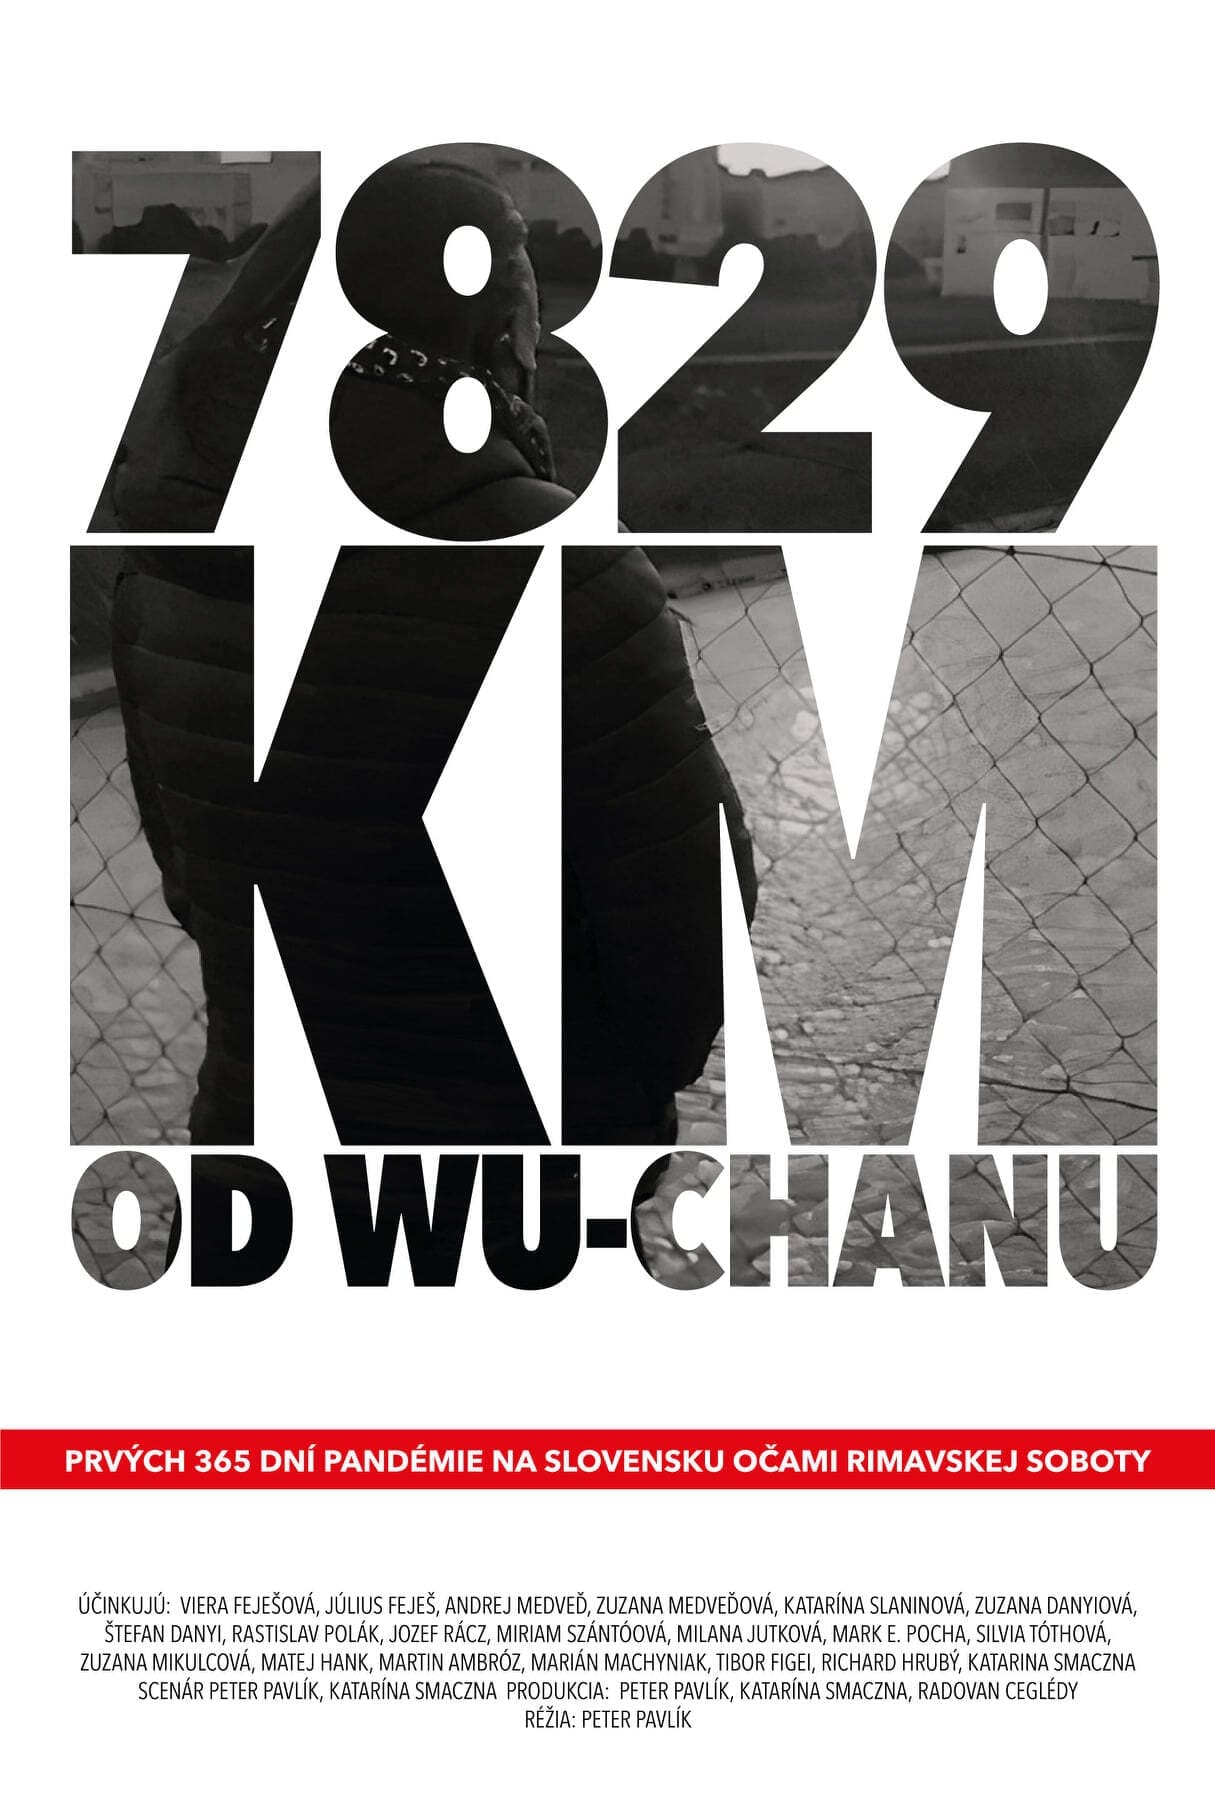 7829 km od Wu-chanu